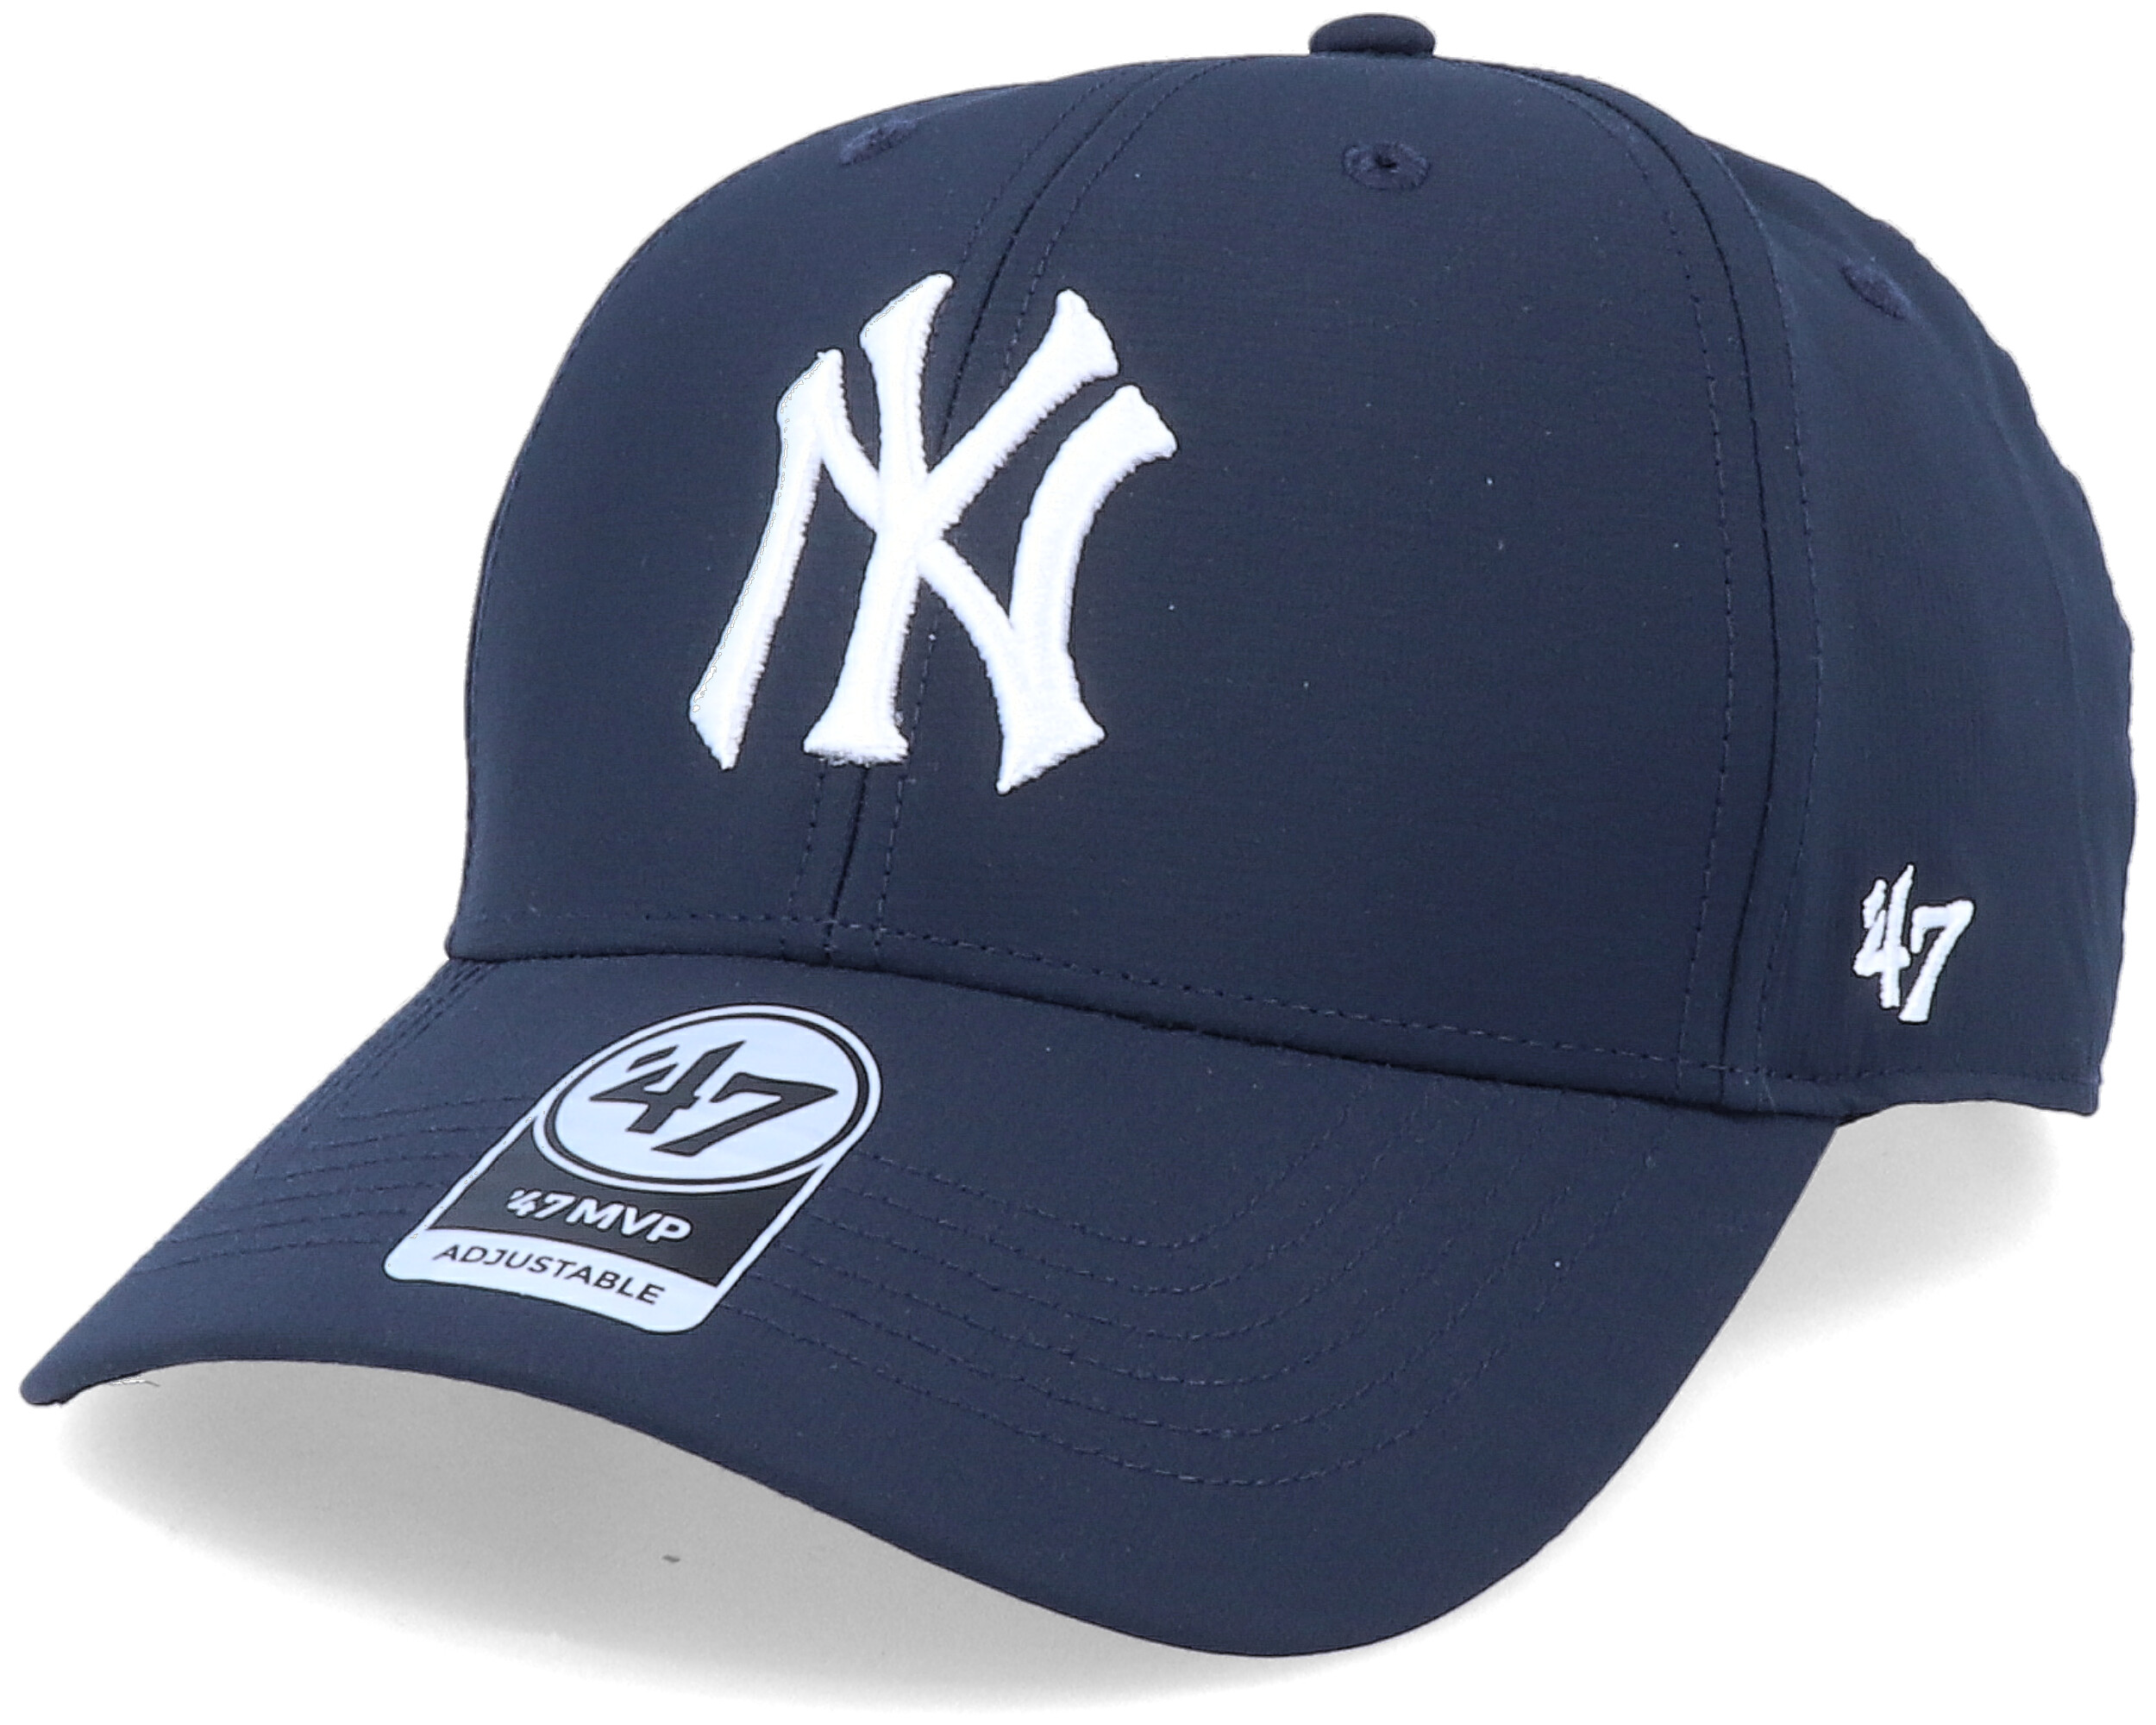 Top Fanatics MLB New York Yankees Navy - Fútbol Emotion